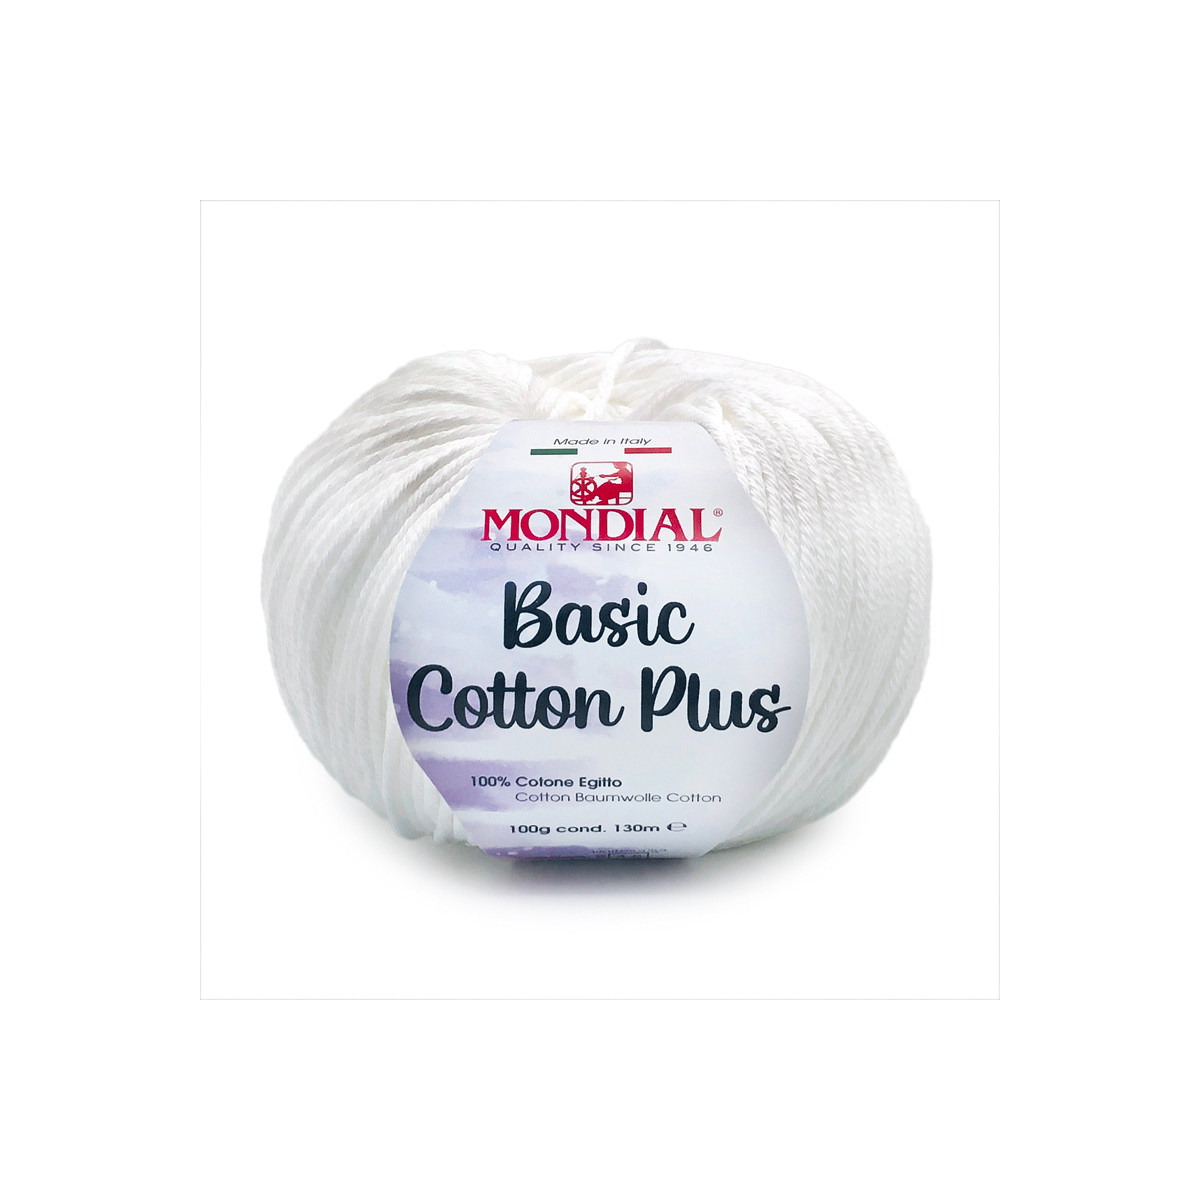 Basic Cotton Plus Mondial Cotone Egitto 100% - Acu et Filo